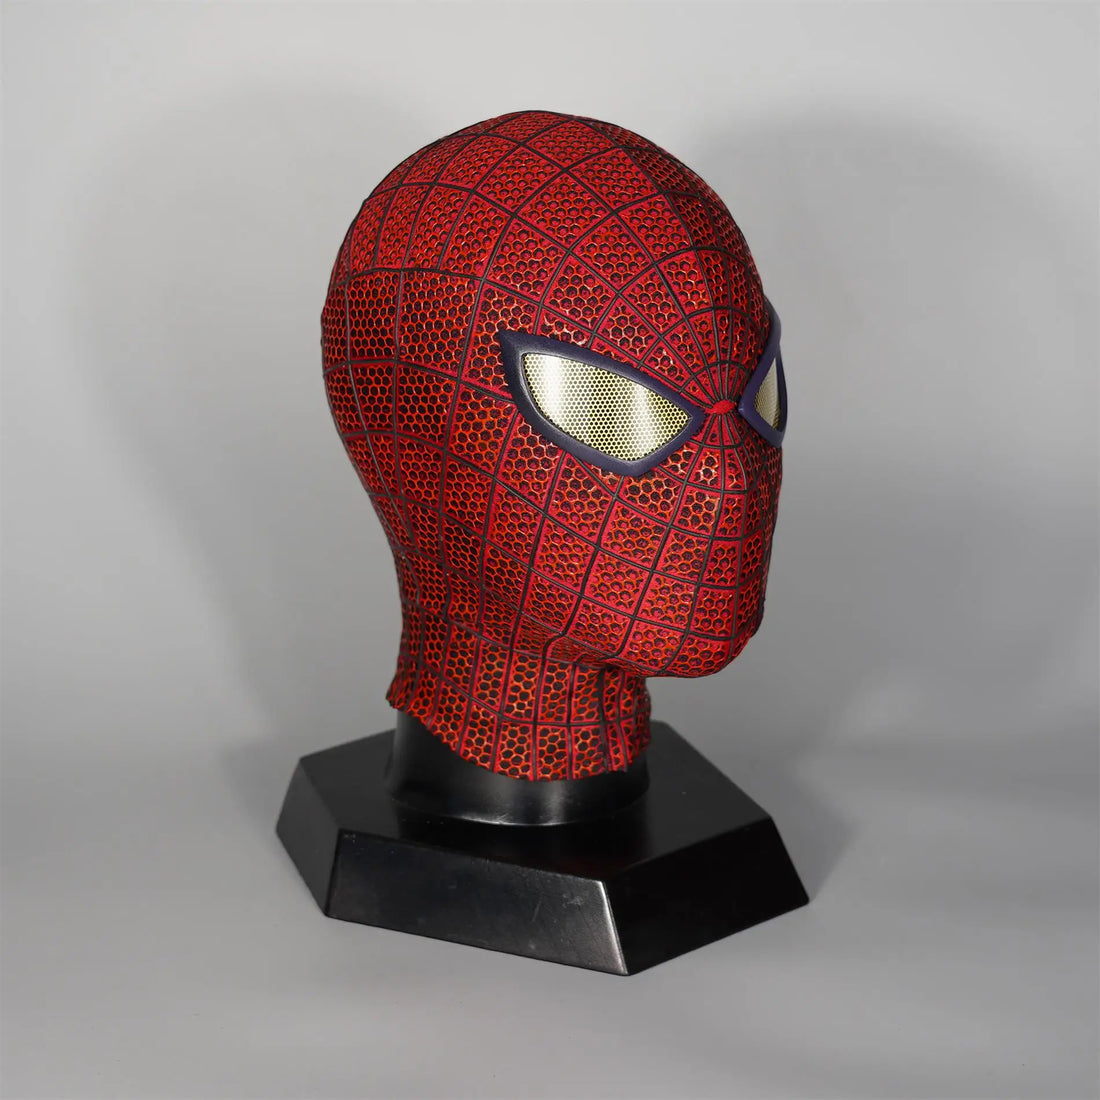 Marvel Venom Spider-man 1 Mask Garfield With Faceshell 1:1 3d Handmade Spiderman Cosplay Costume Masks Replica Festival Gift